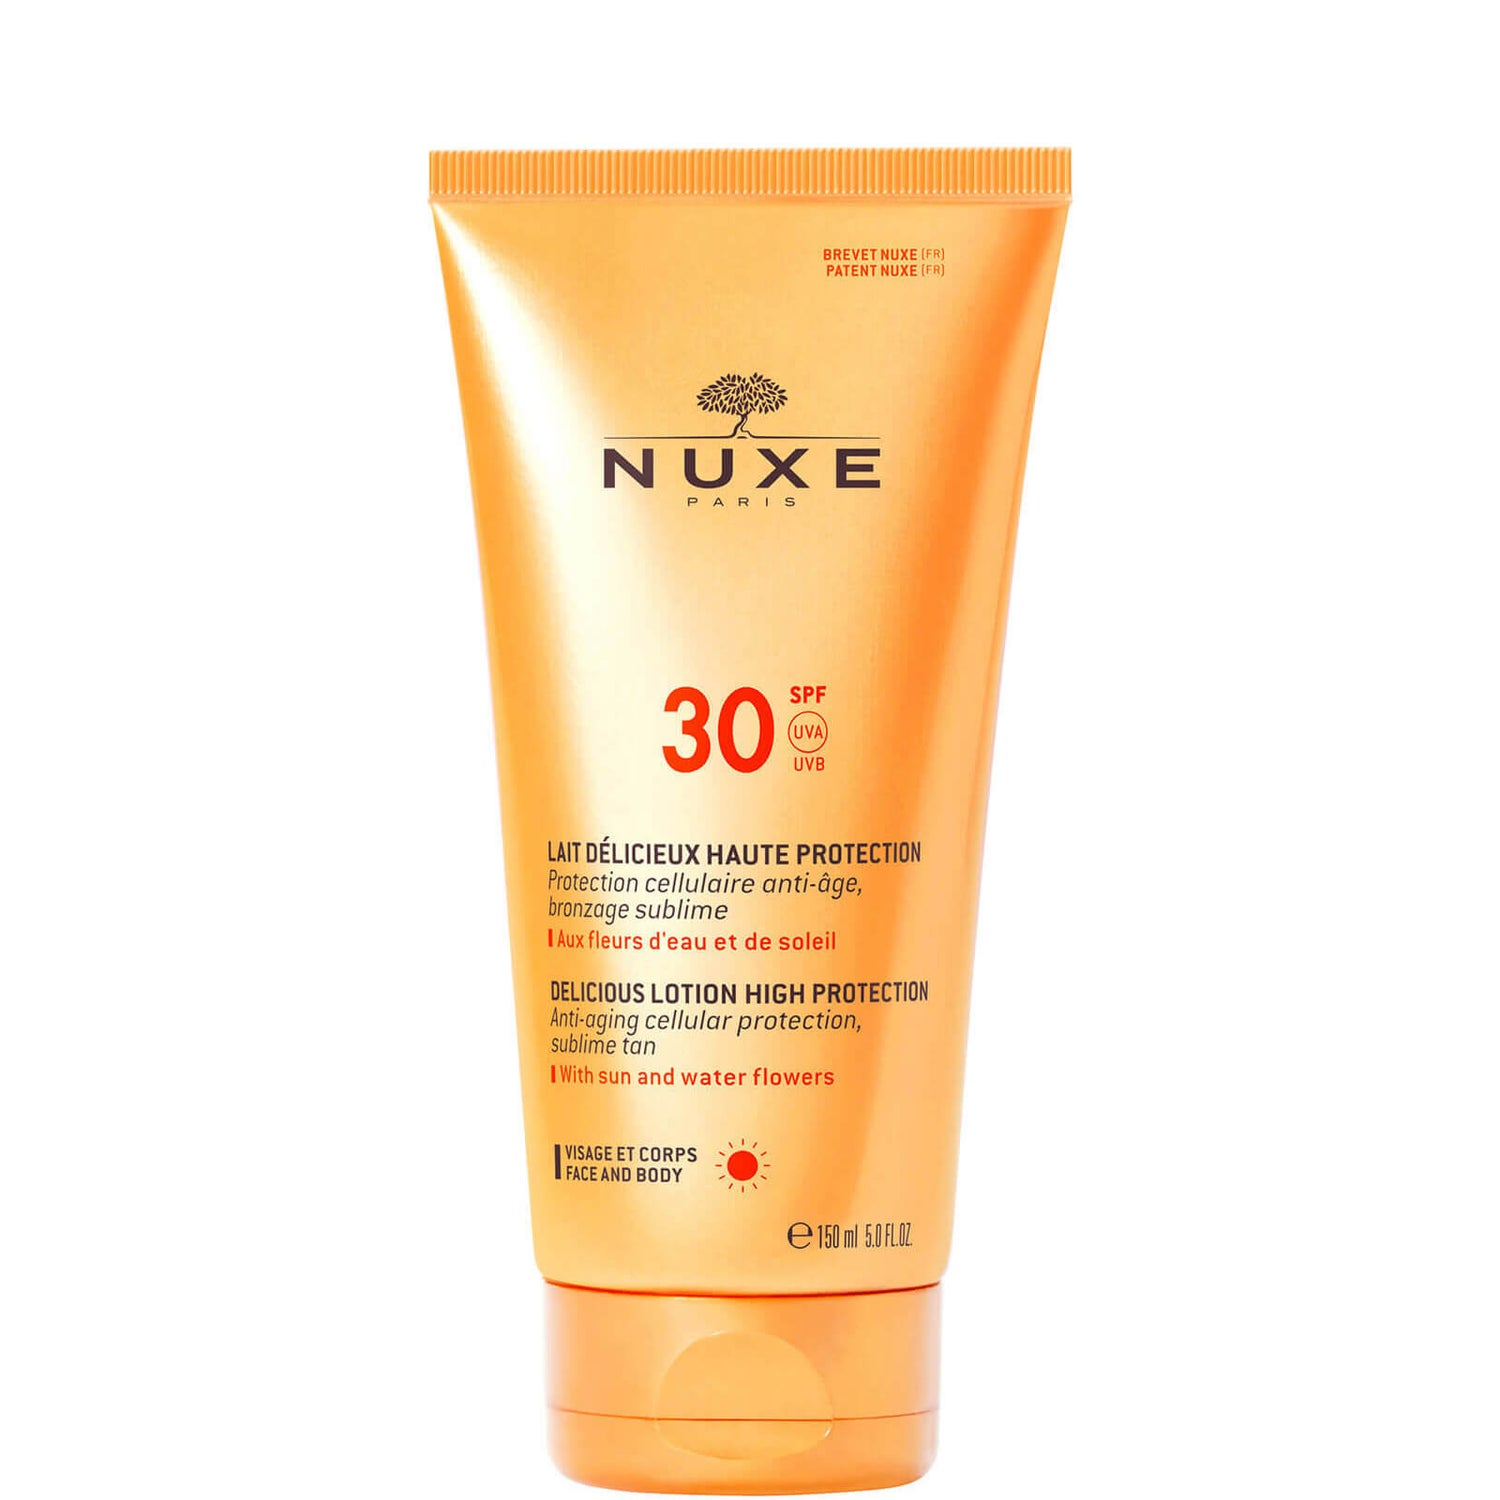 NUXE Sun Face and Body Delicious Lotion SPF 30 (150ml)